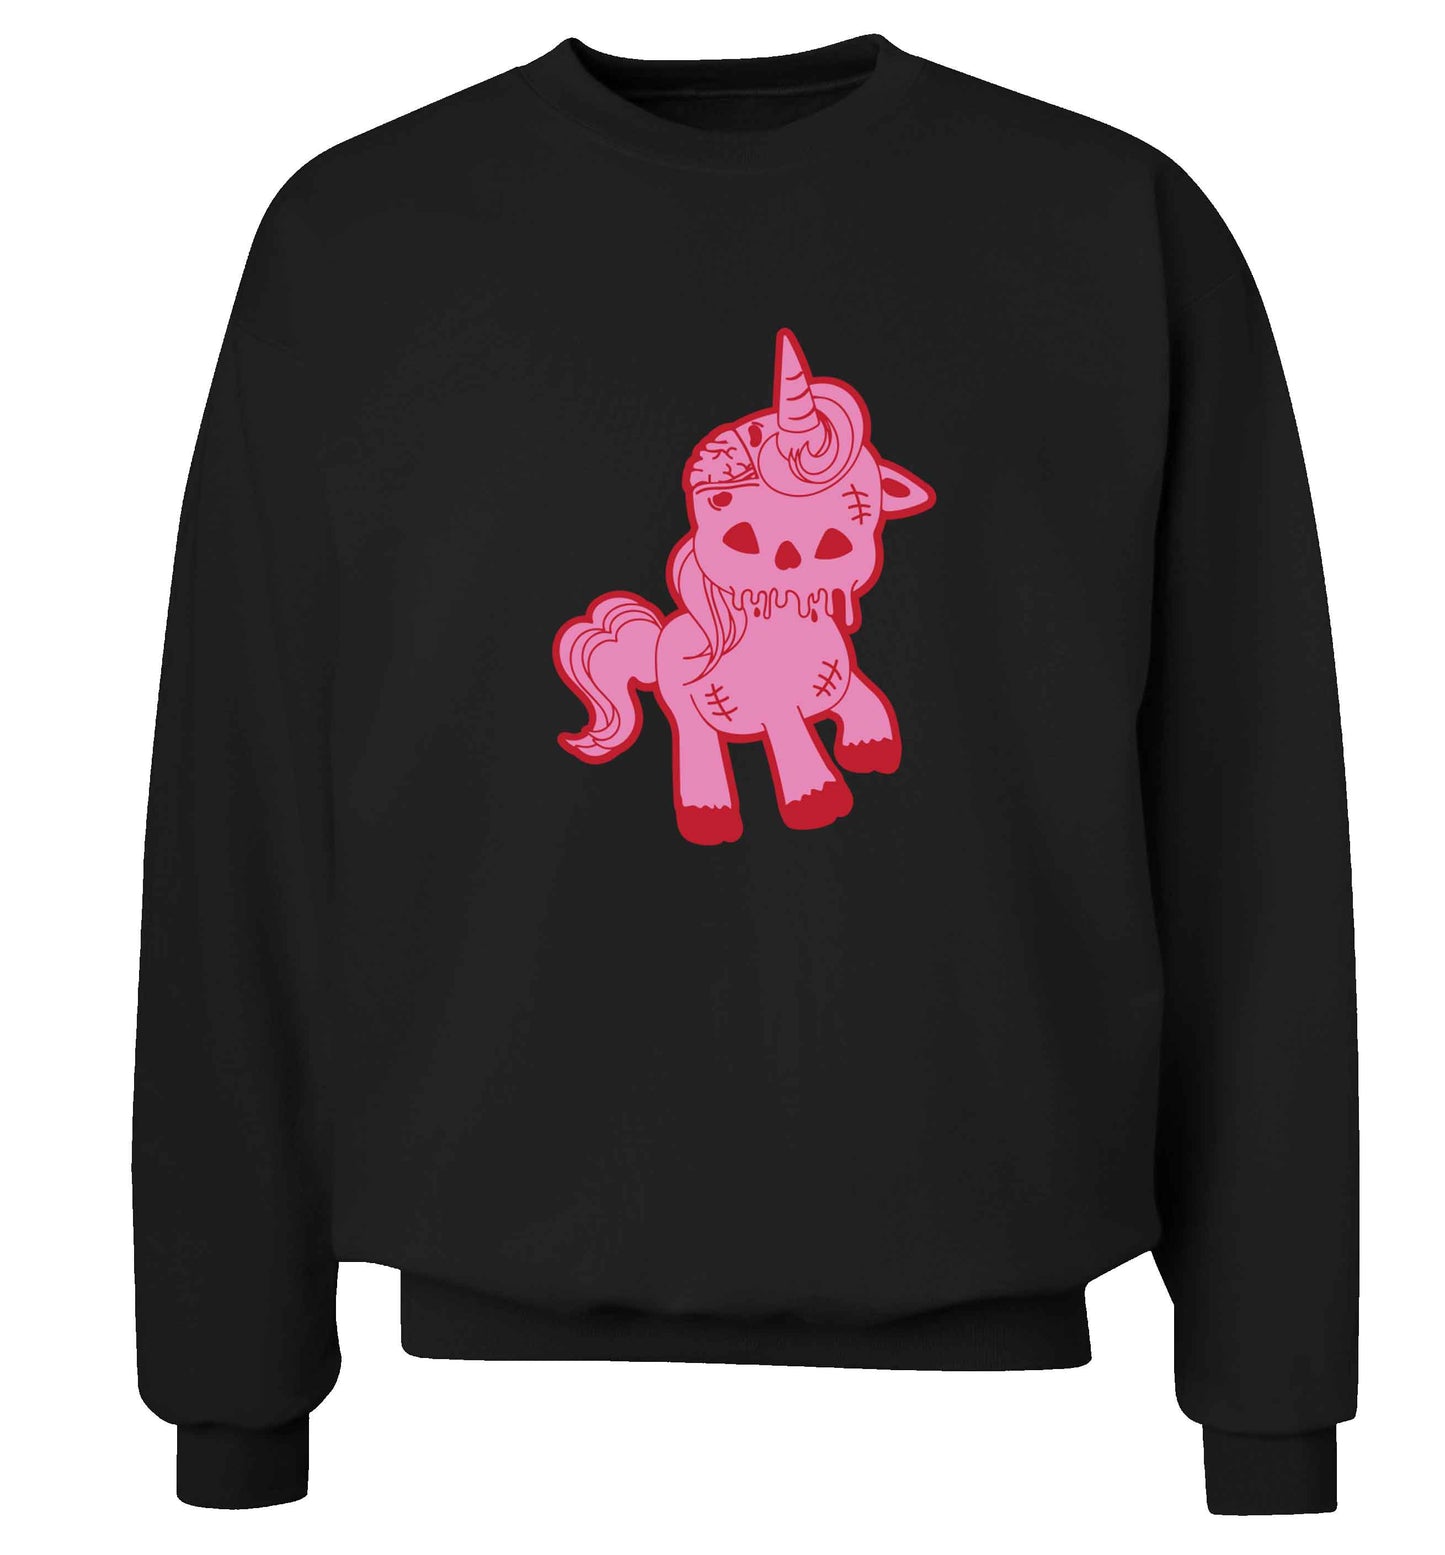 Zombie unicorn zombiecorn adult's unisex black sweater 2XL